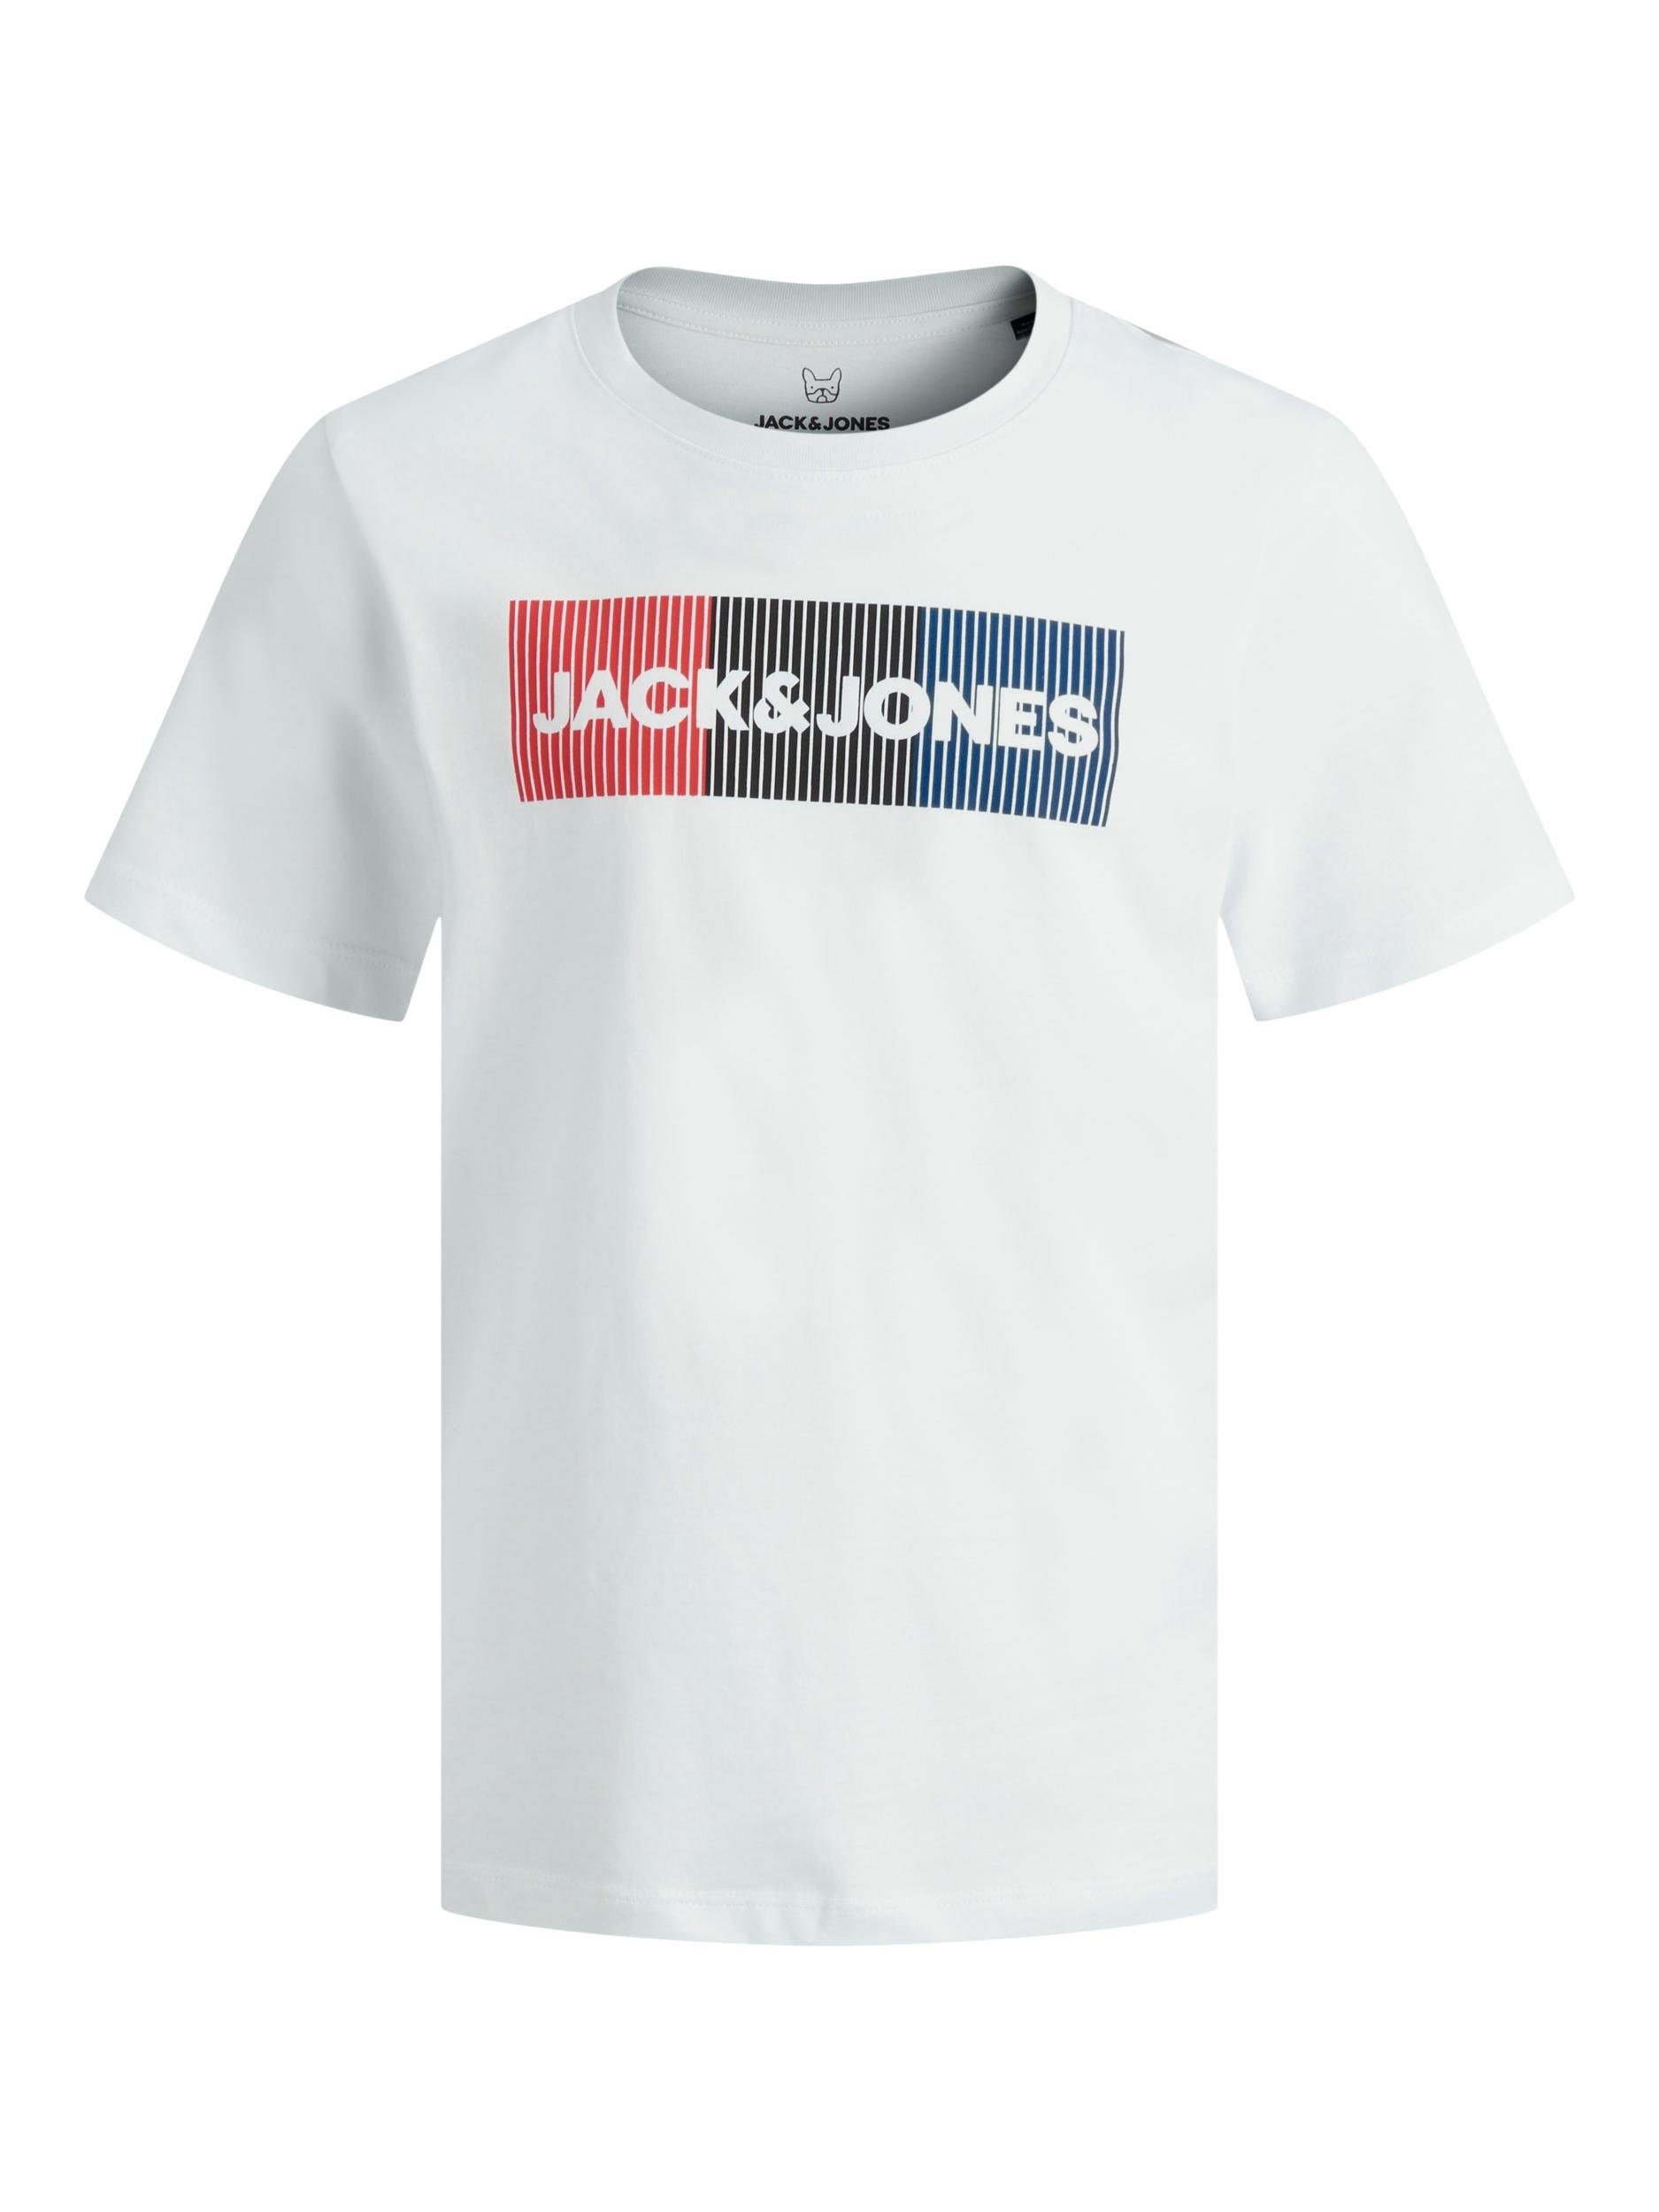 SS LOGO Jack CREW Jones PLAY TEE white JR T-Shirt Junior & T-Shirt JJECORP